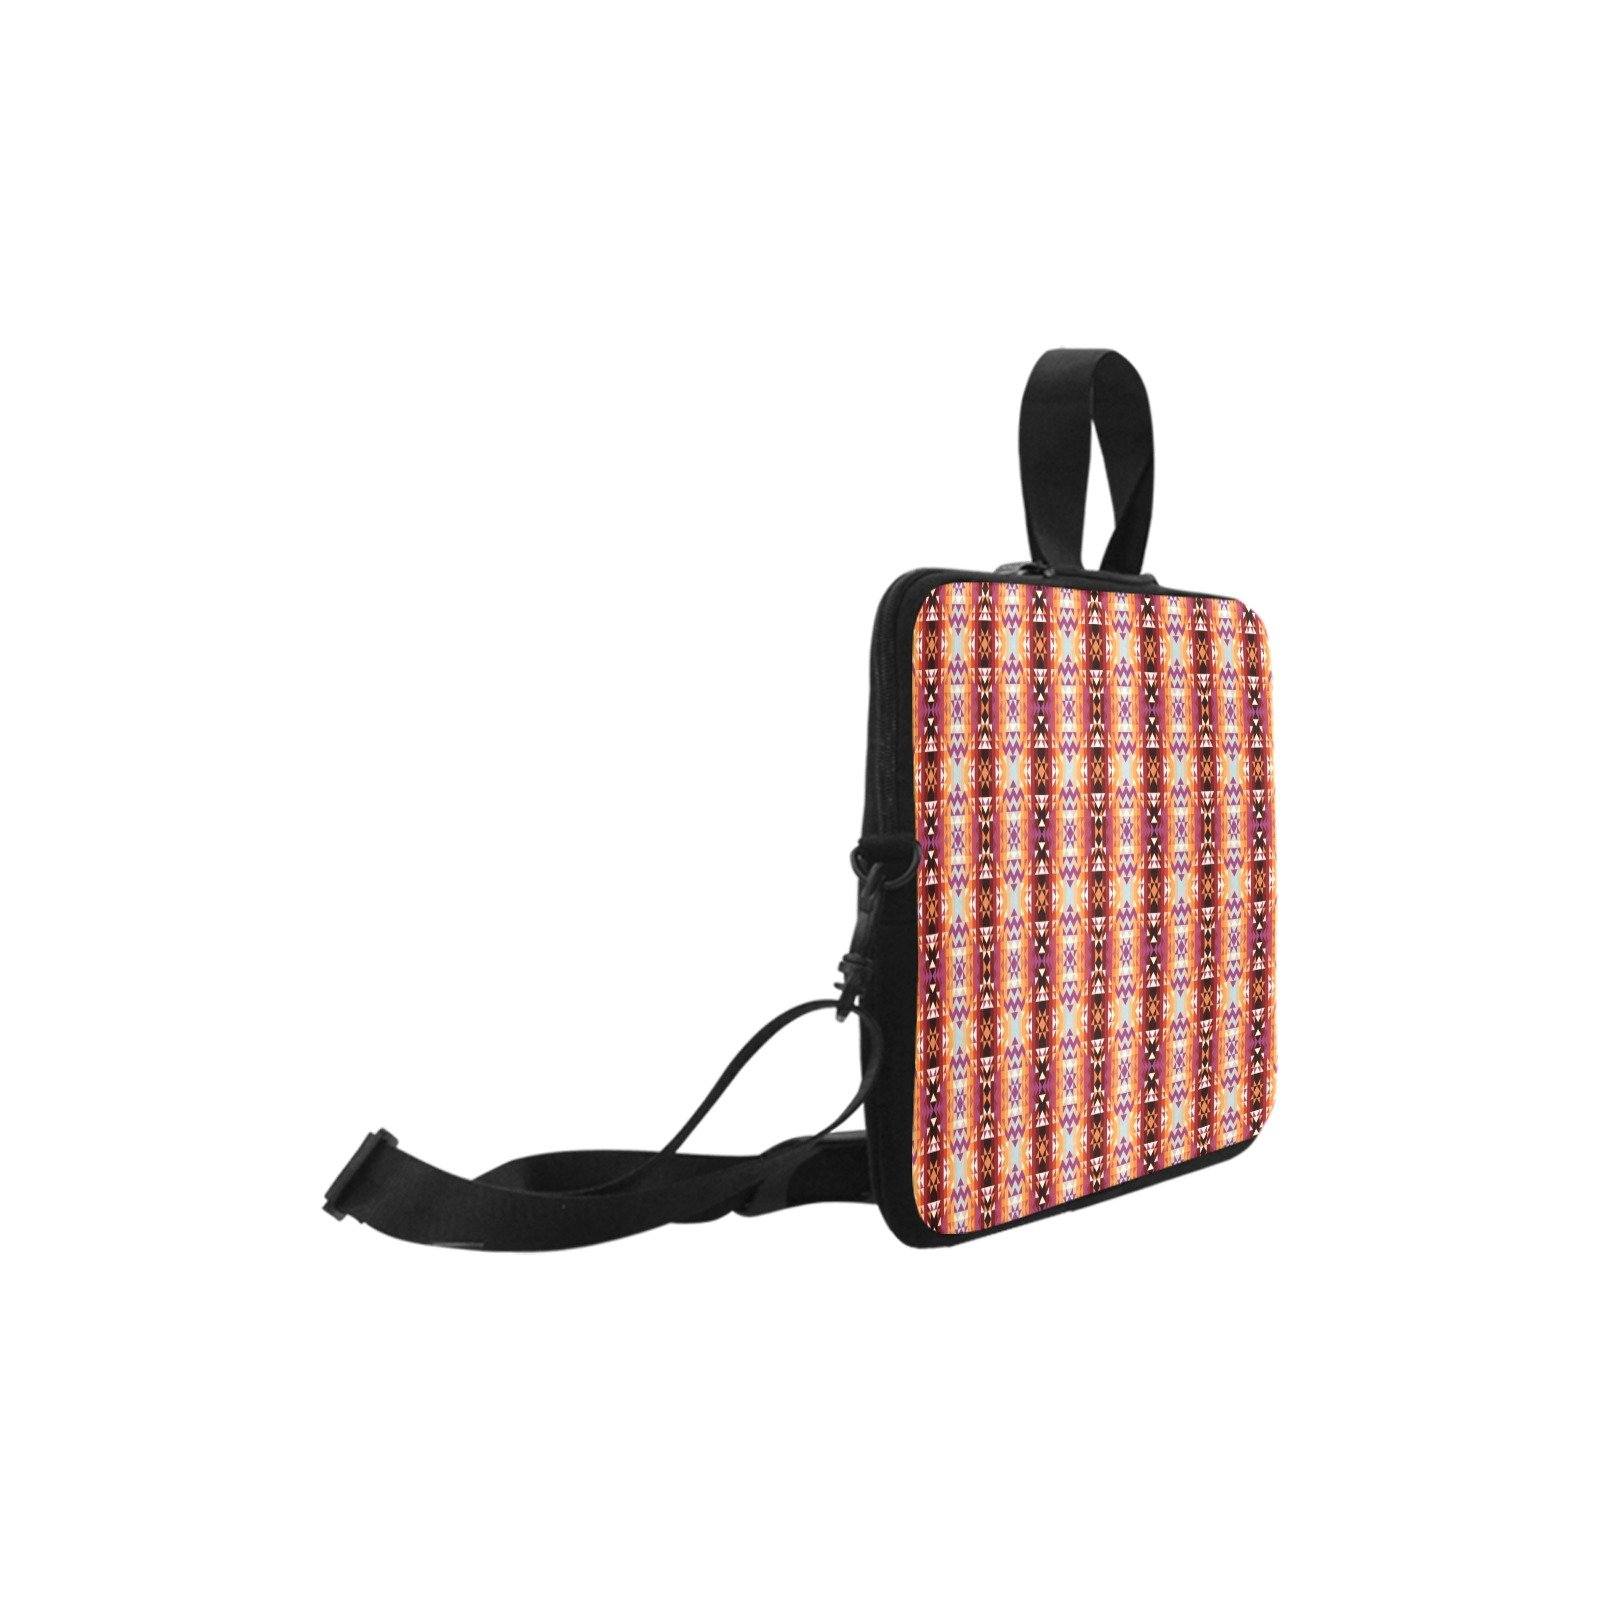 Heatwave Laptop Handbags 11" bag e-joyer 